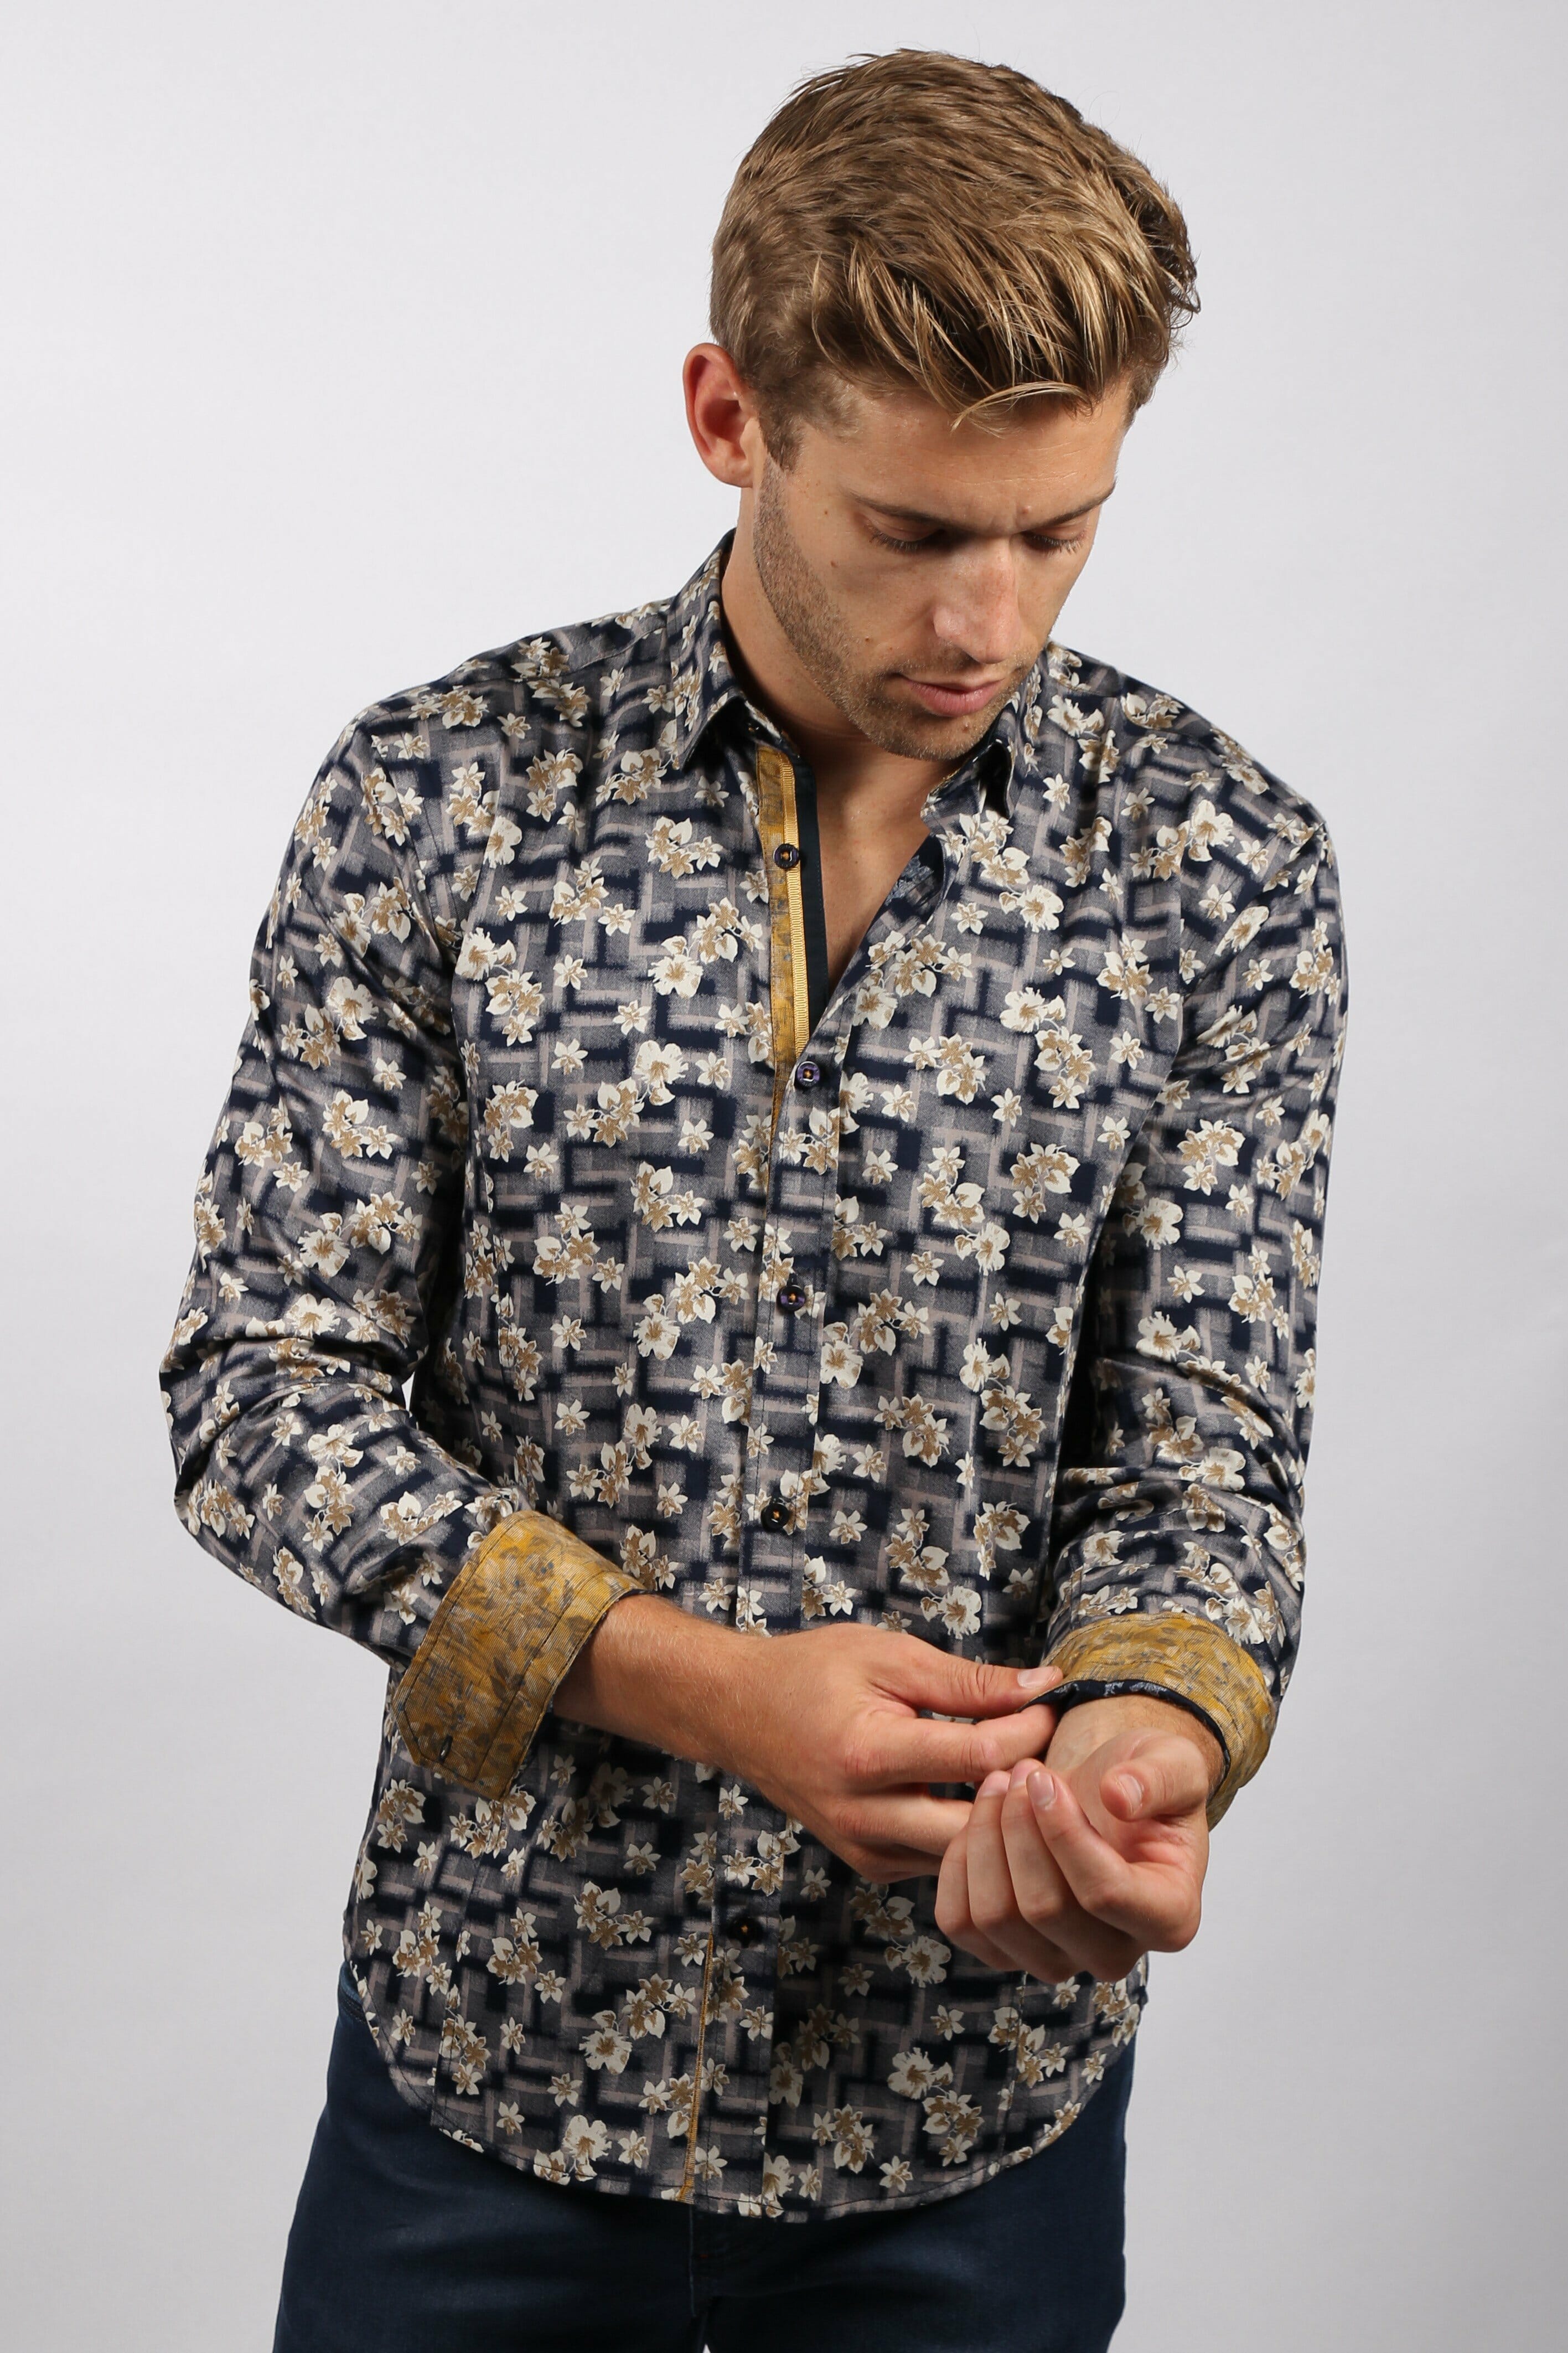 WSPLYSPJY Mens Printing Fashion Long Sleeve Button Up Pleuche Dress Shirt 